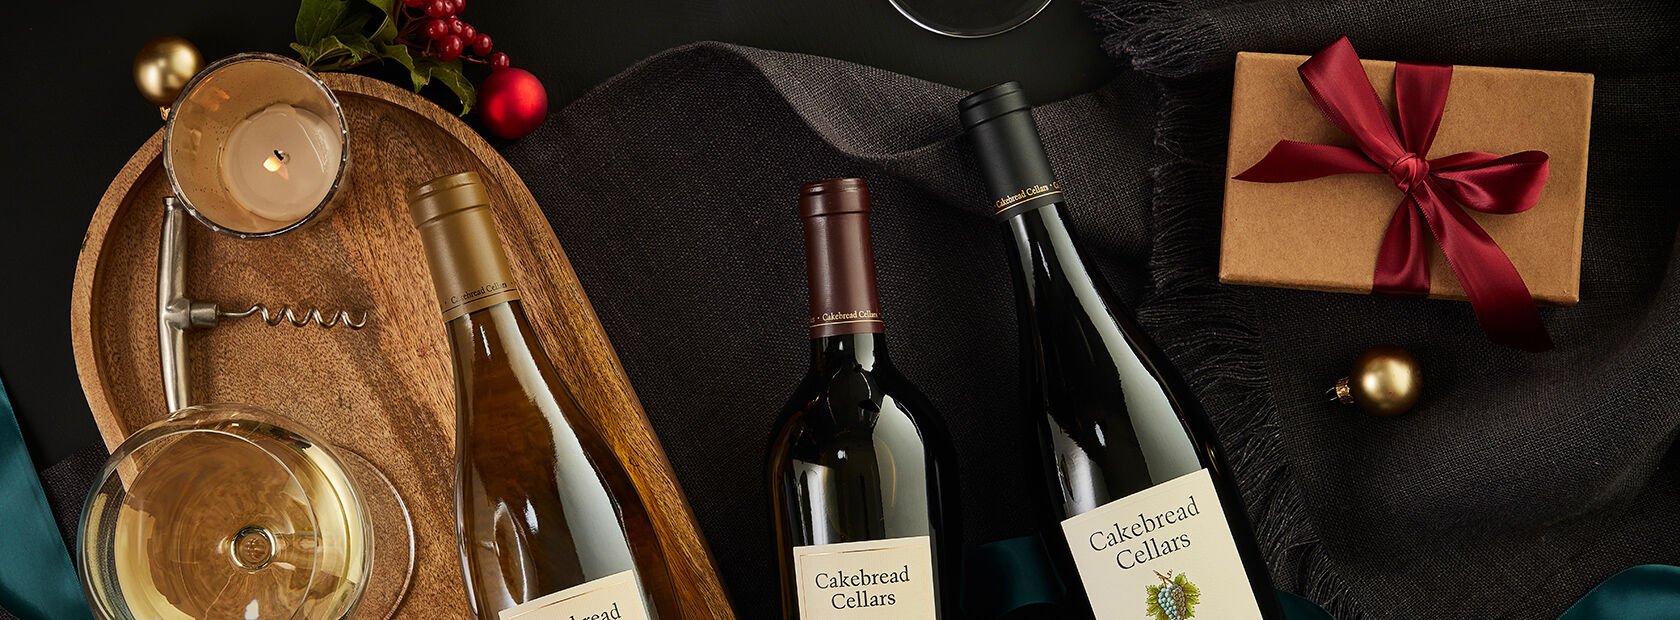 Cakebread Cellars Cabernet Sauvignon | Exquisite Wine & Alcohol Gift Delivery Toronto Canada | Vyno